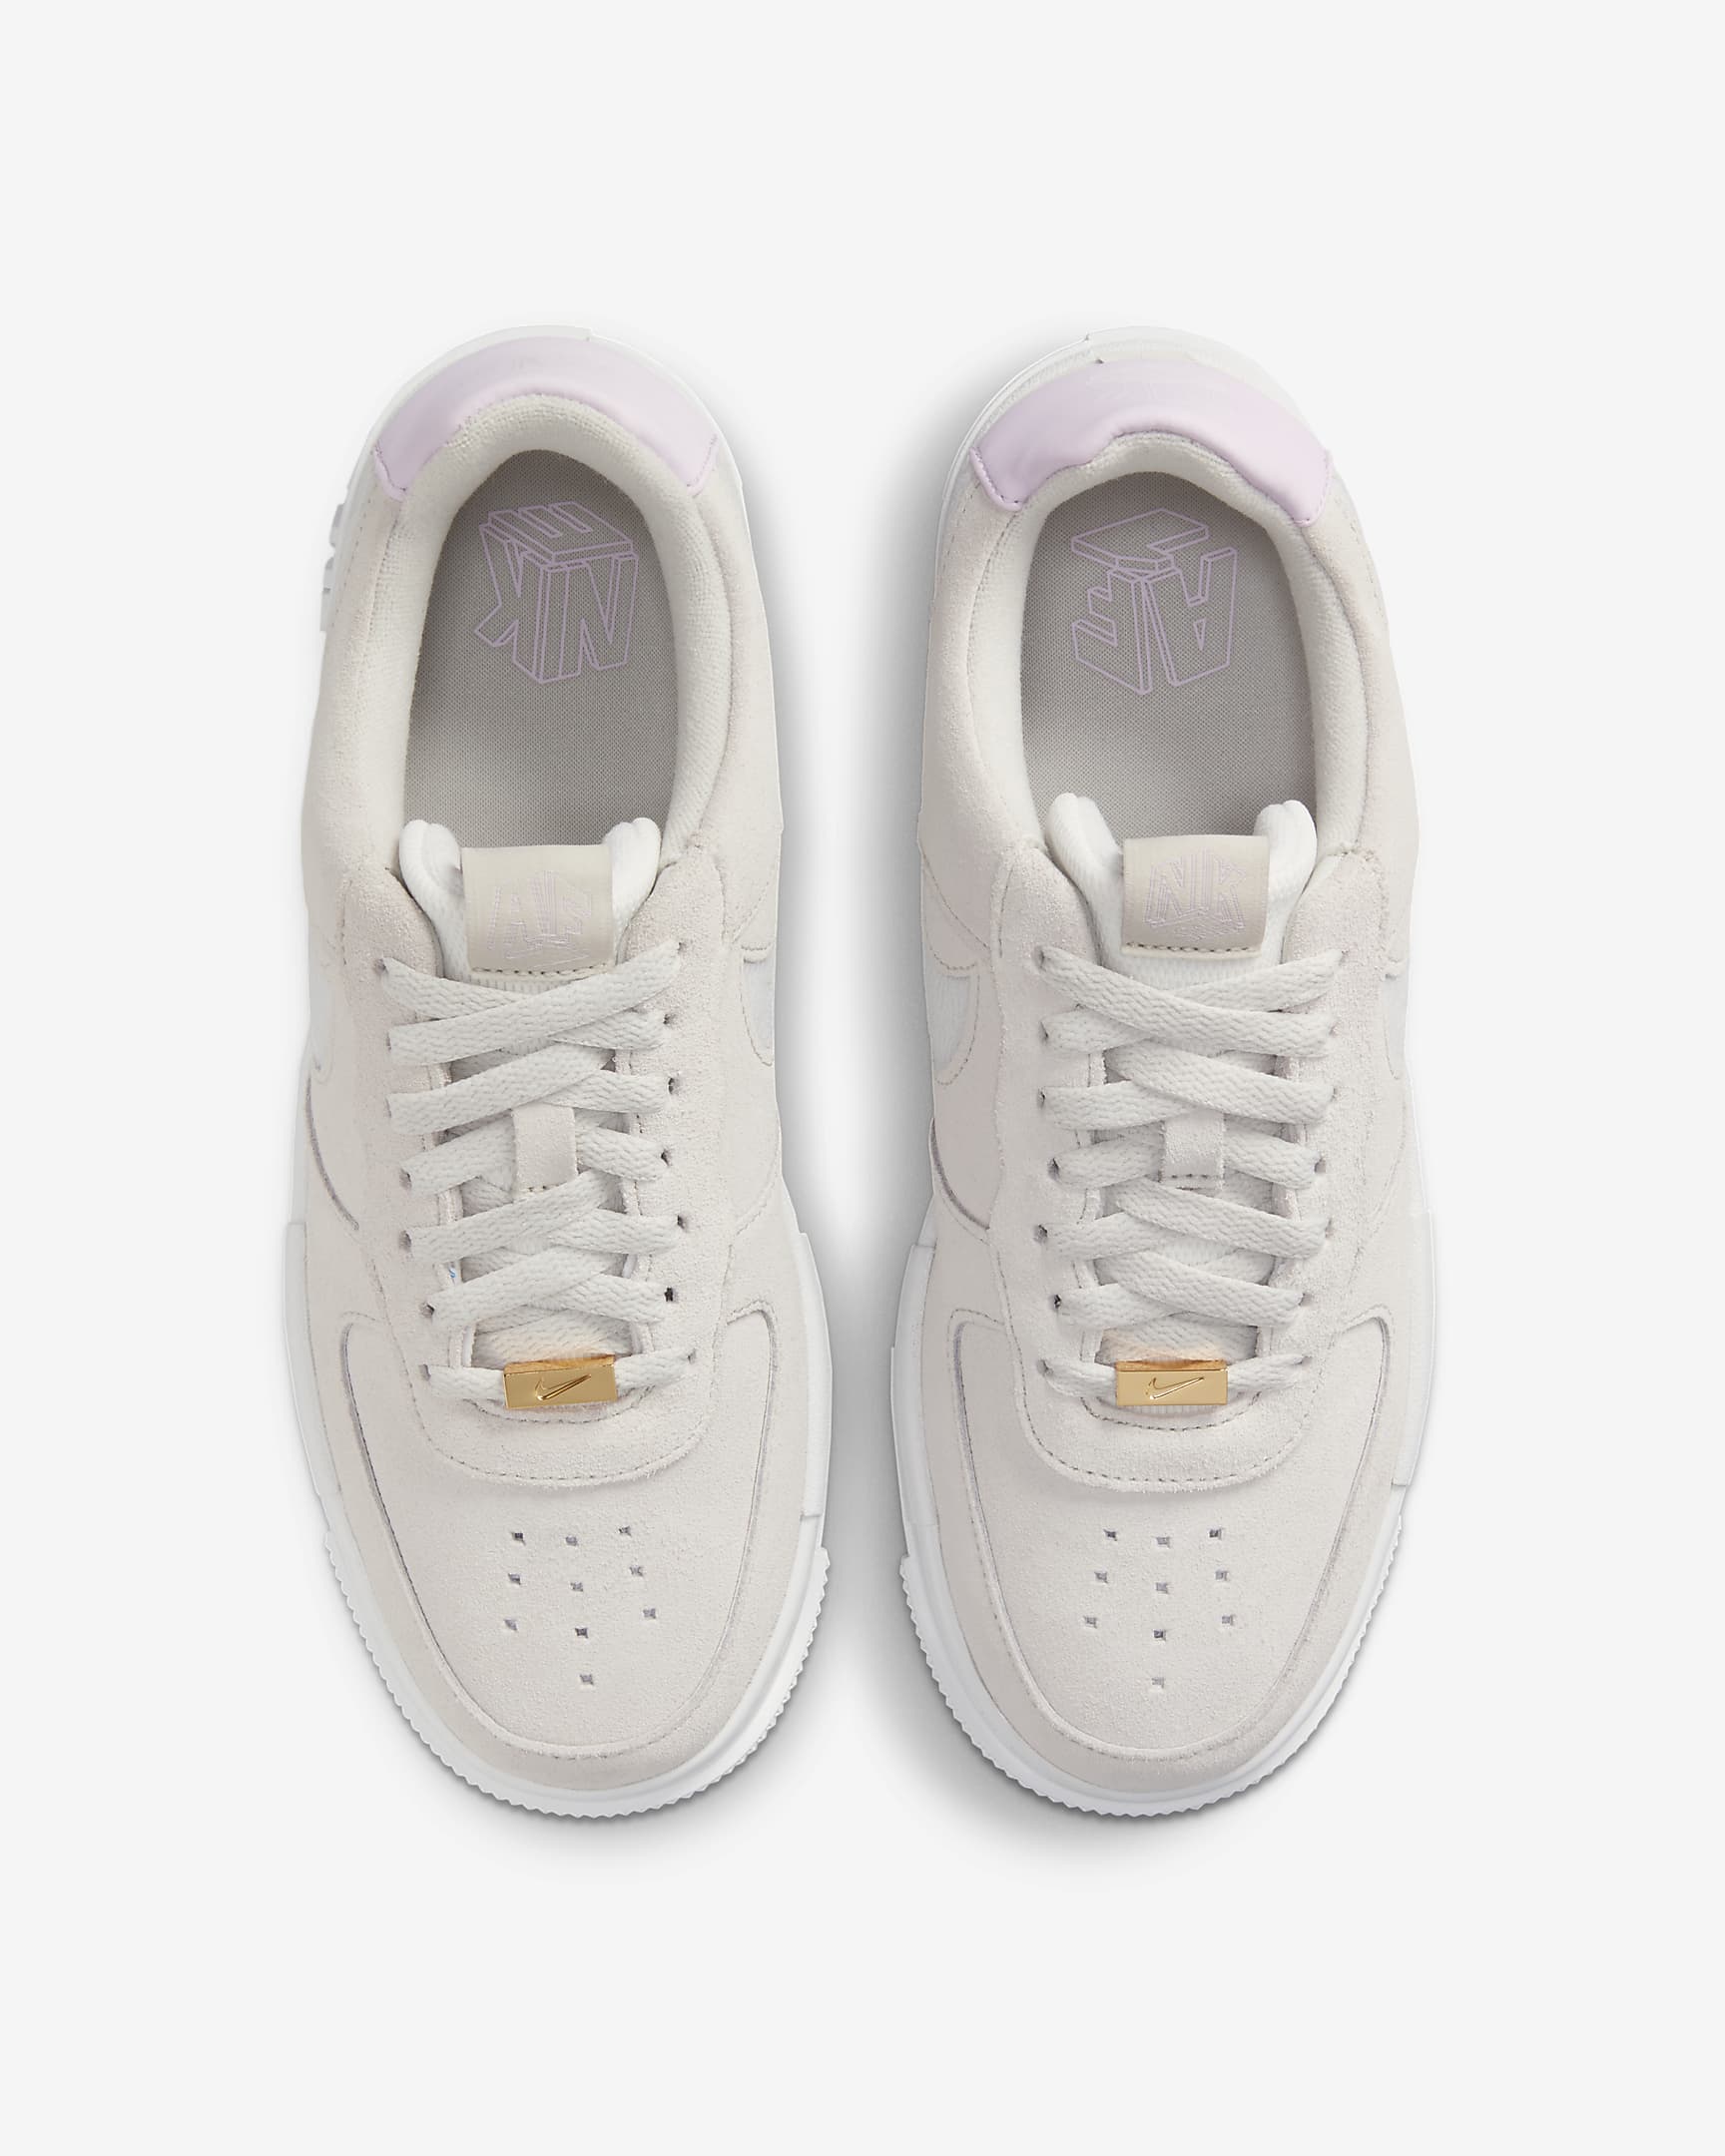 Nike Air Force 1 Pixel Women's Shoes - Summit White/Light Bone/Regal Pink/Photon Dust